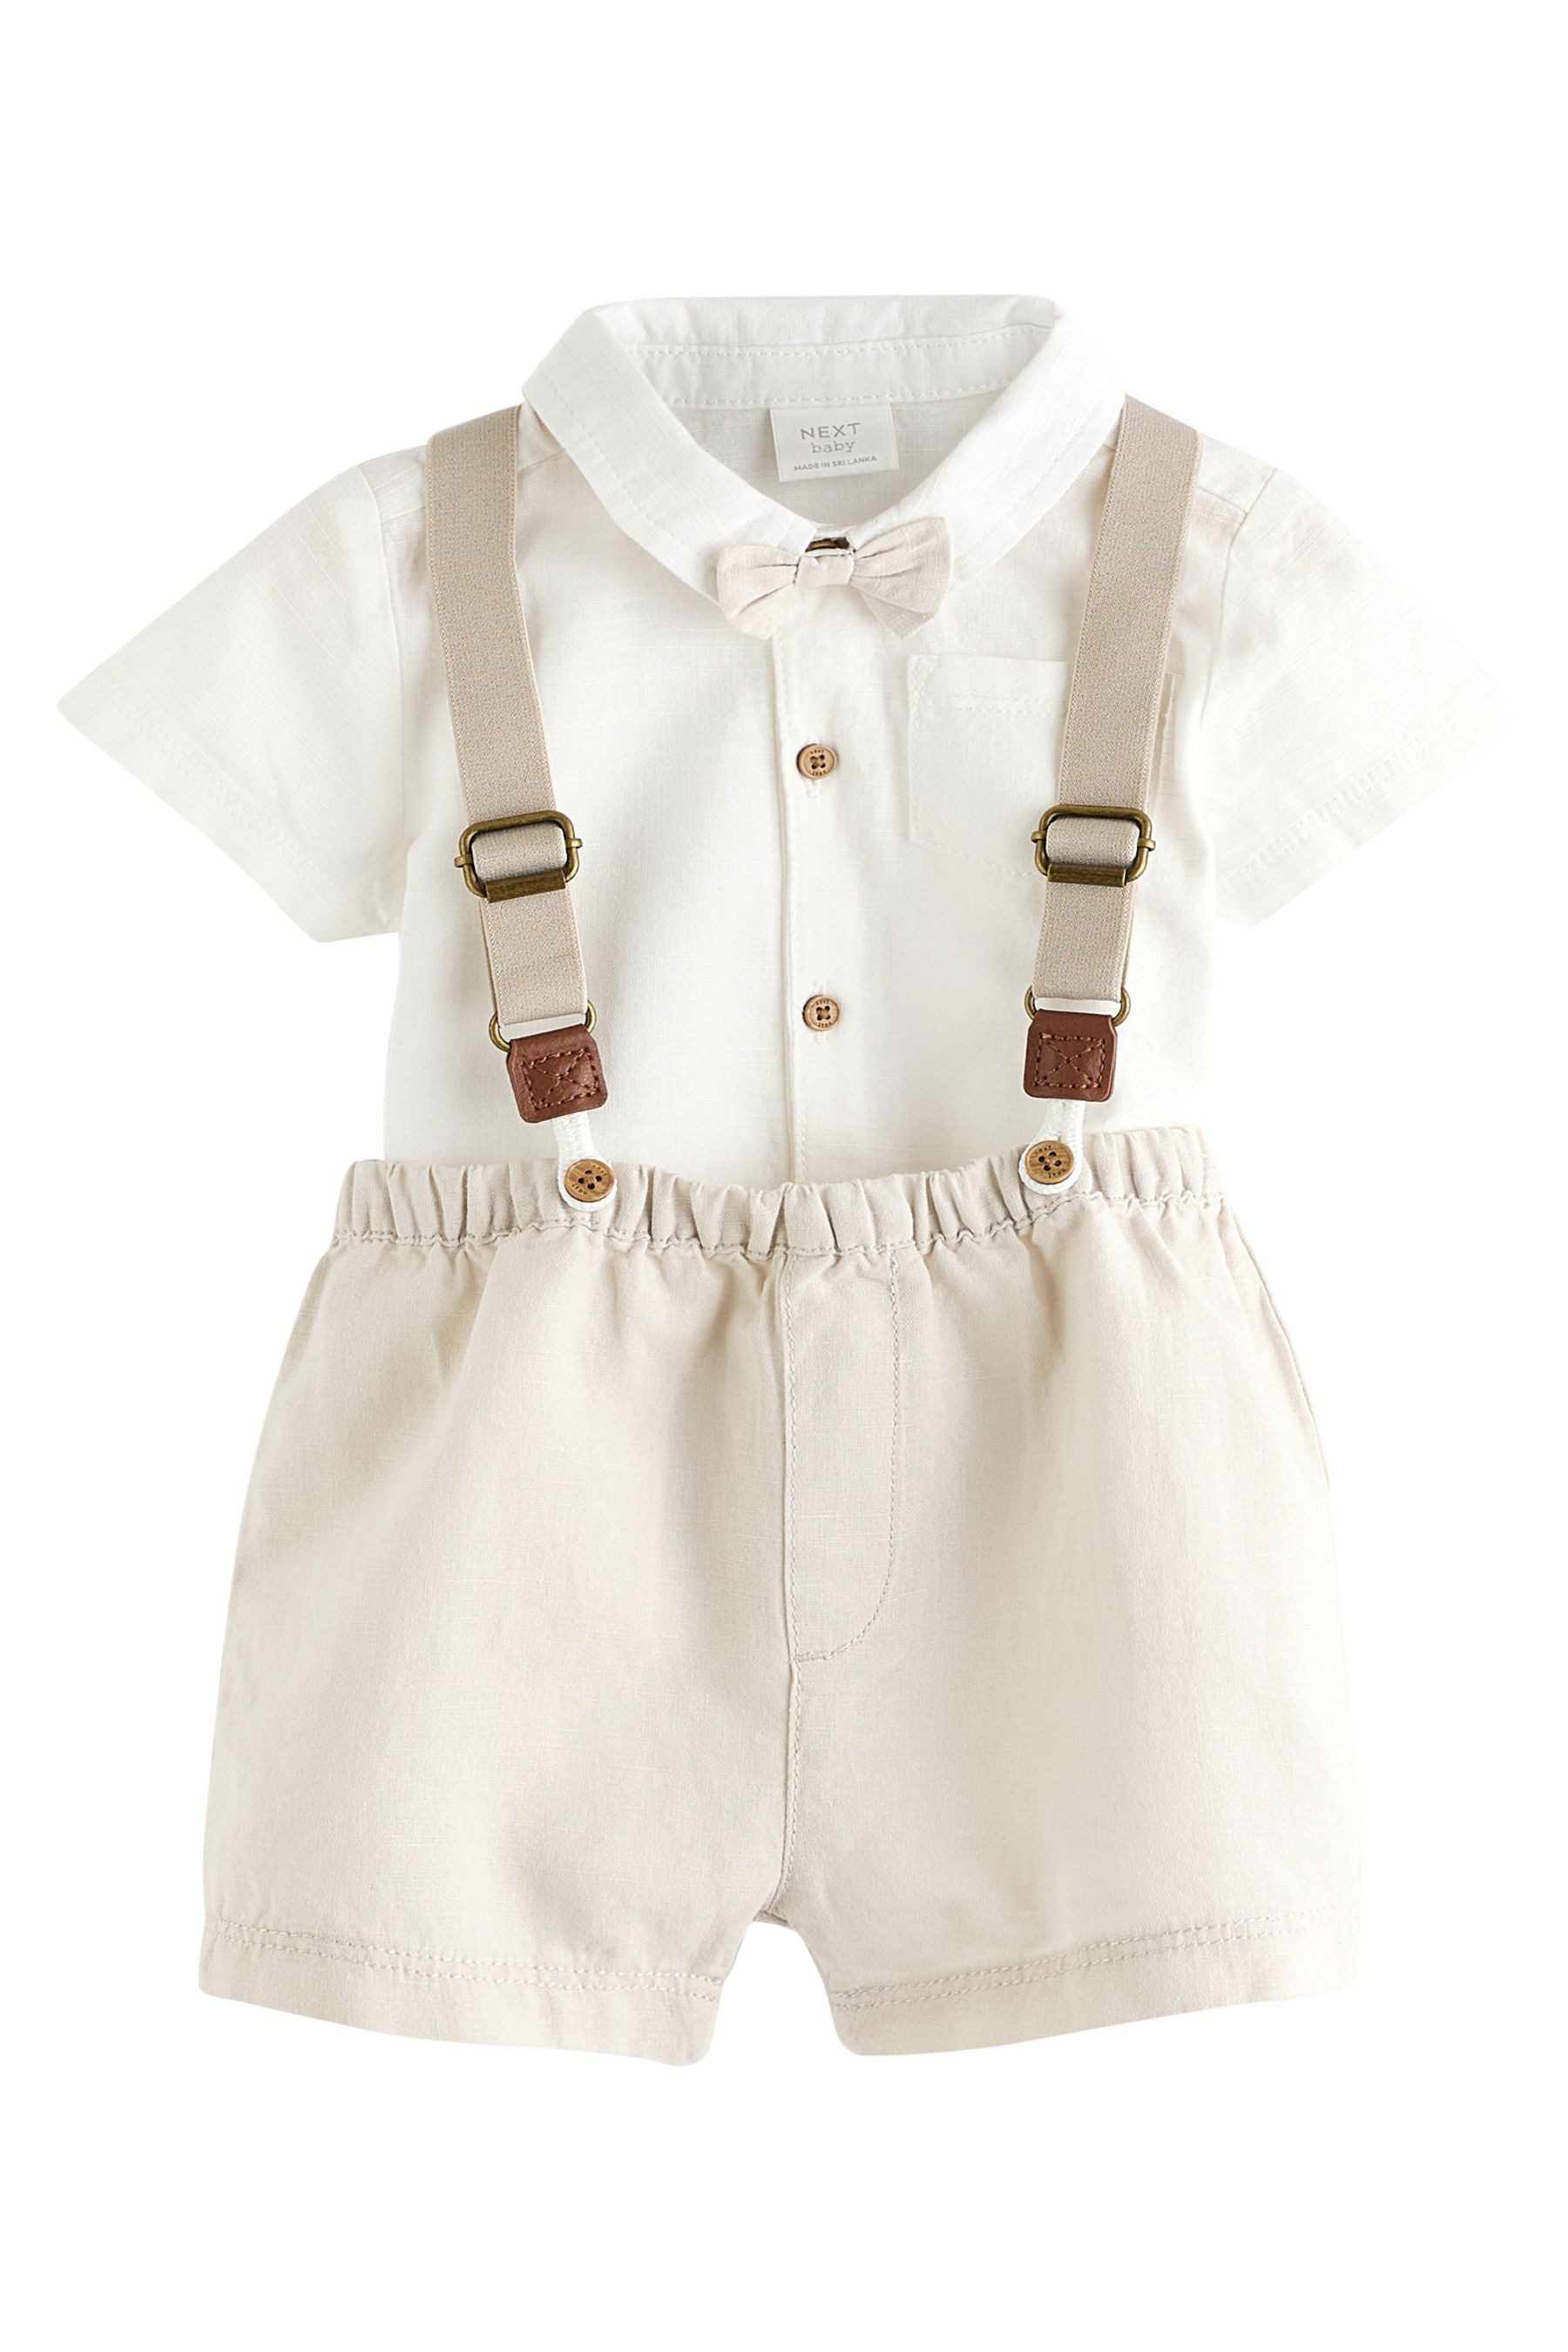 Next Hosenträger 4-teiliges Baby Hemd-Body, Shorts und Hosenträgern (4-St)